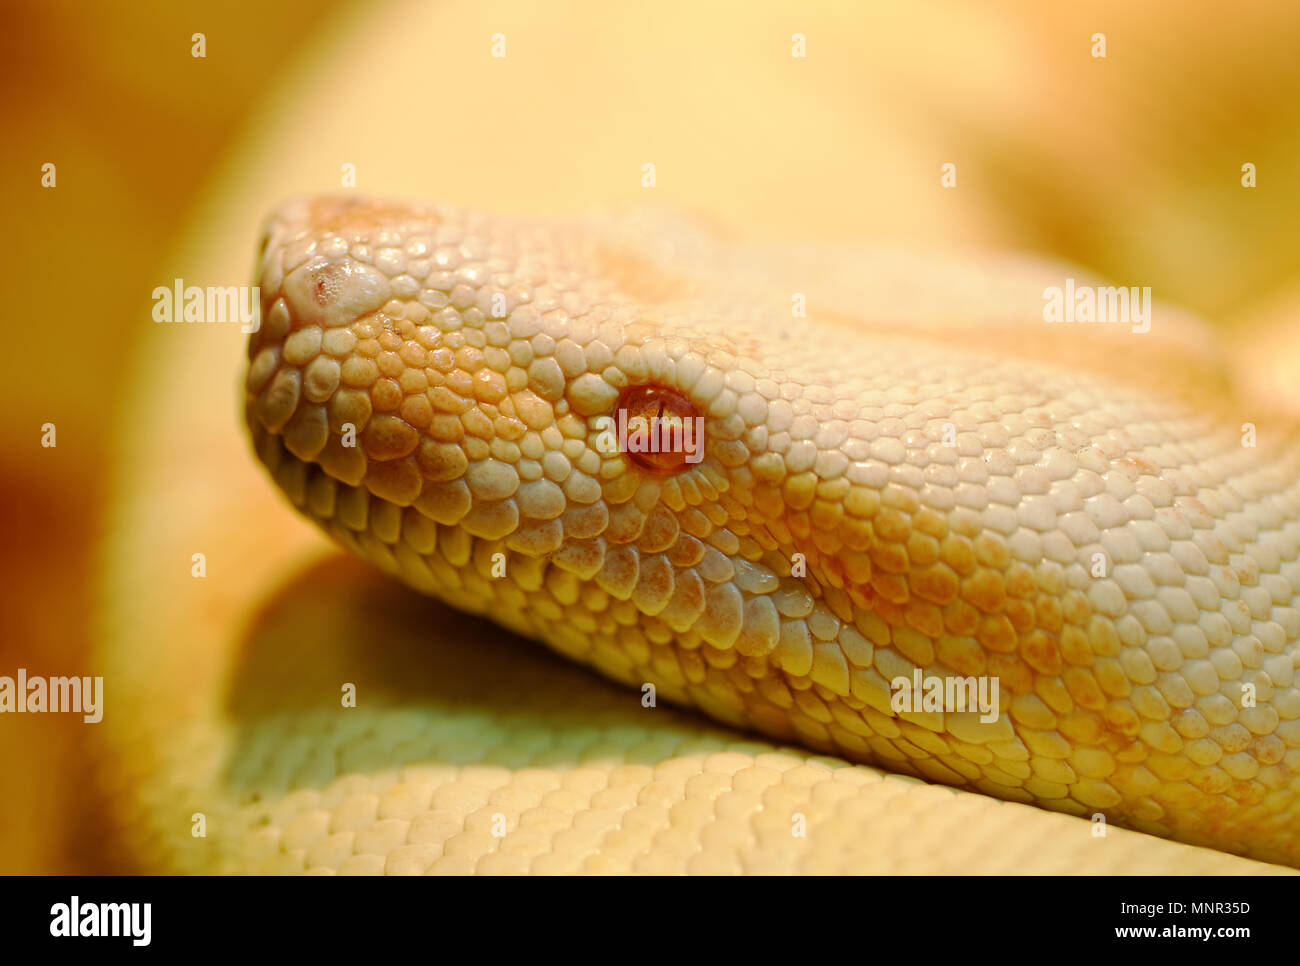 Animali: albino python indiano in una luminosa luce calda, closeup shot Foto Stock